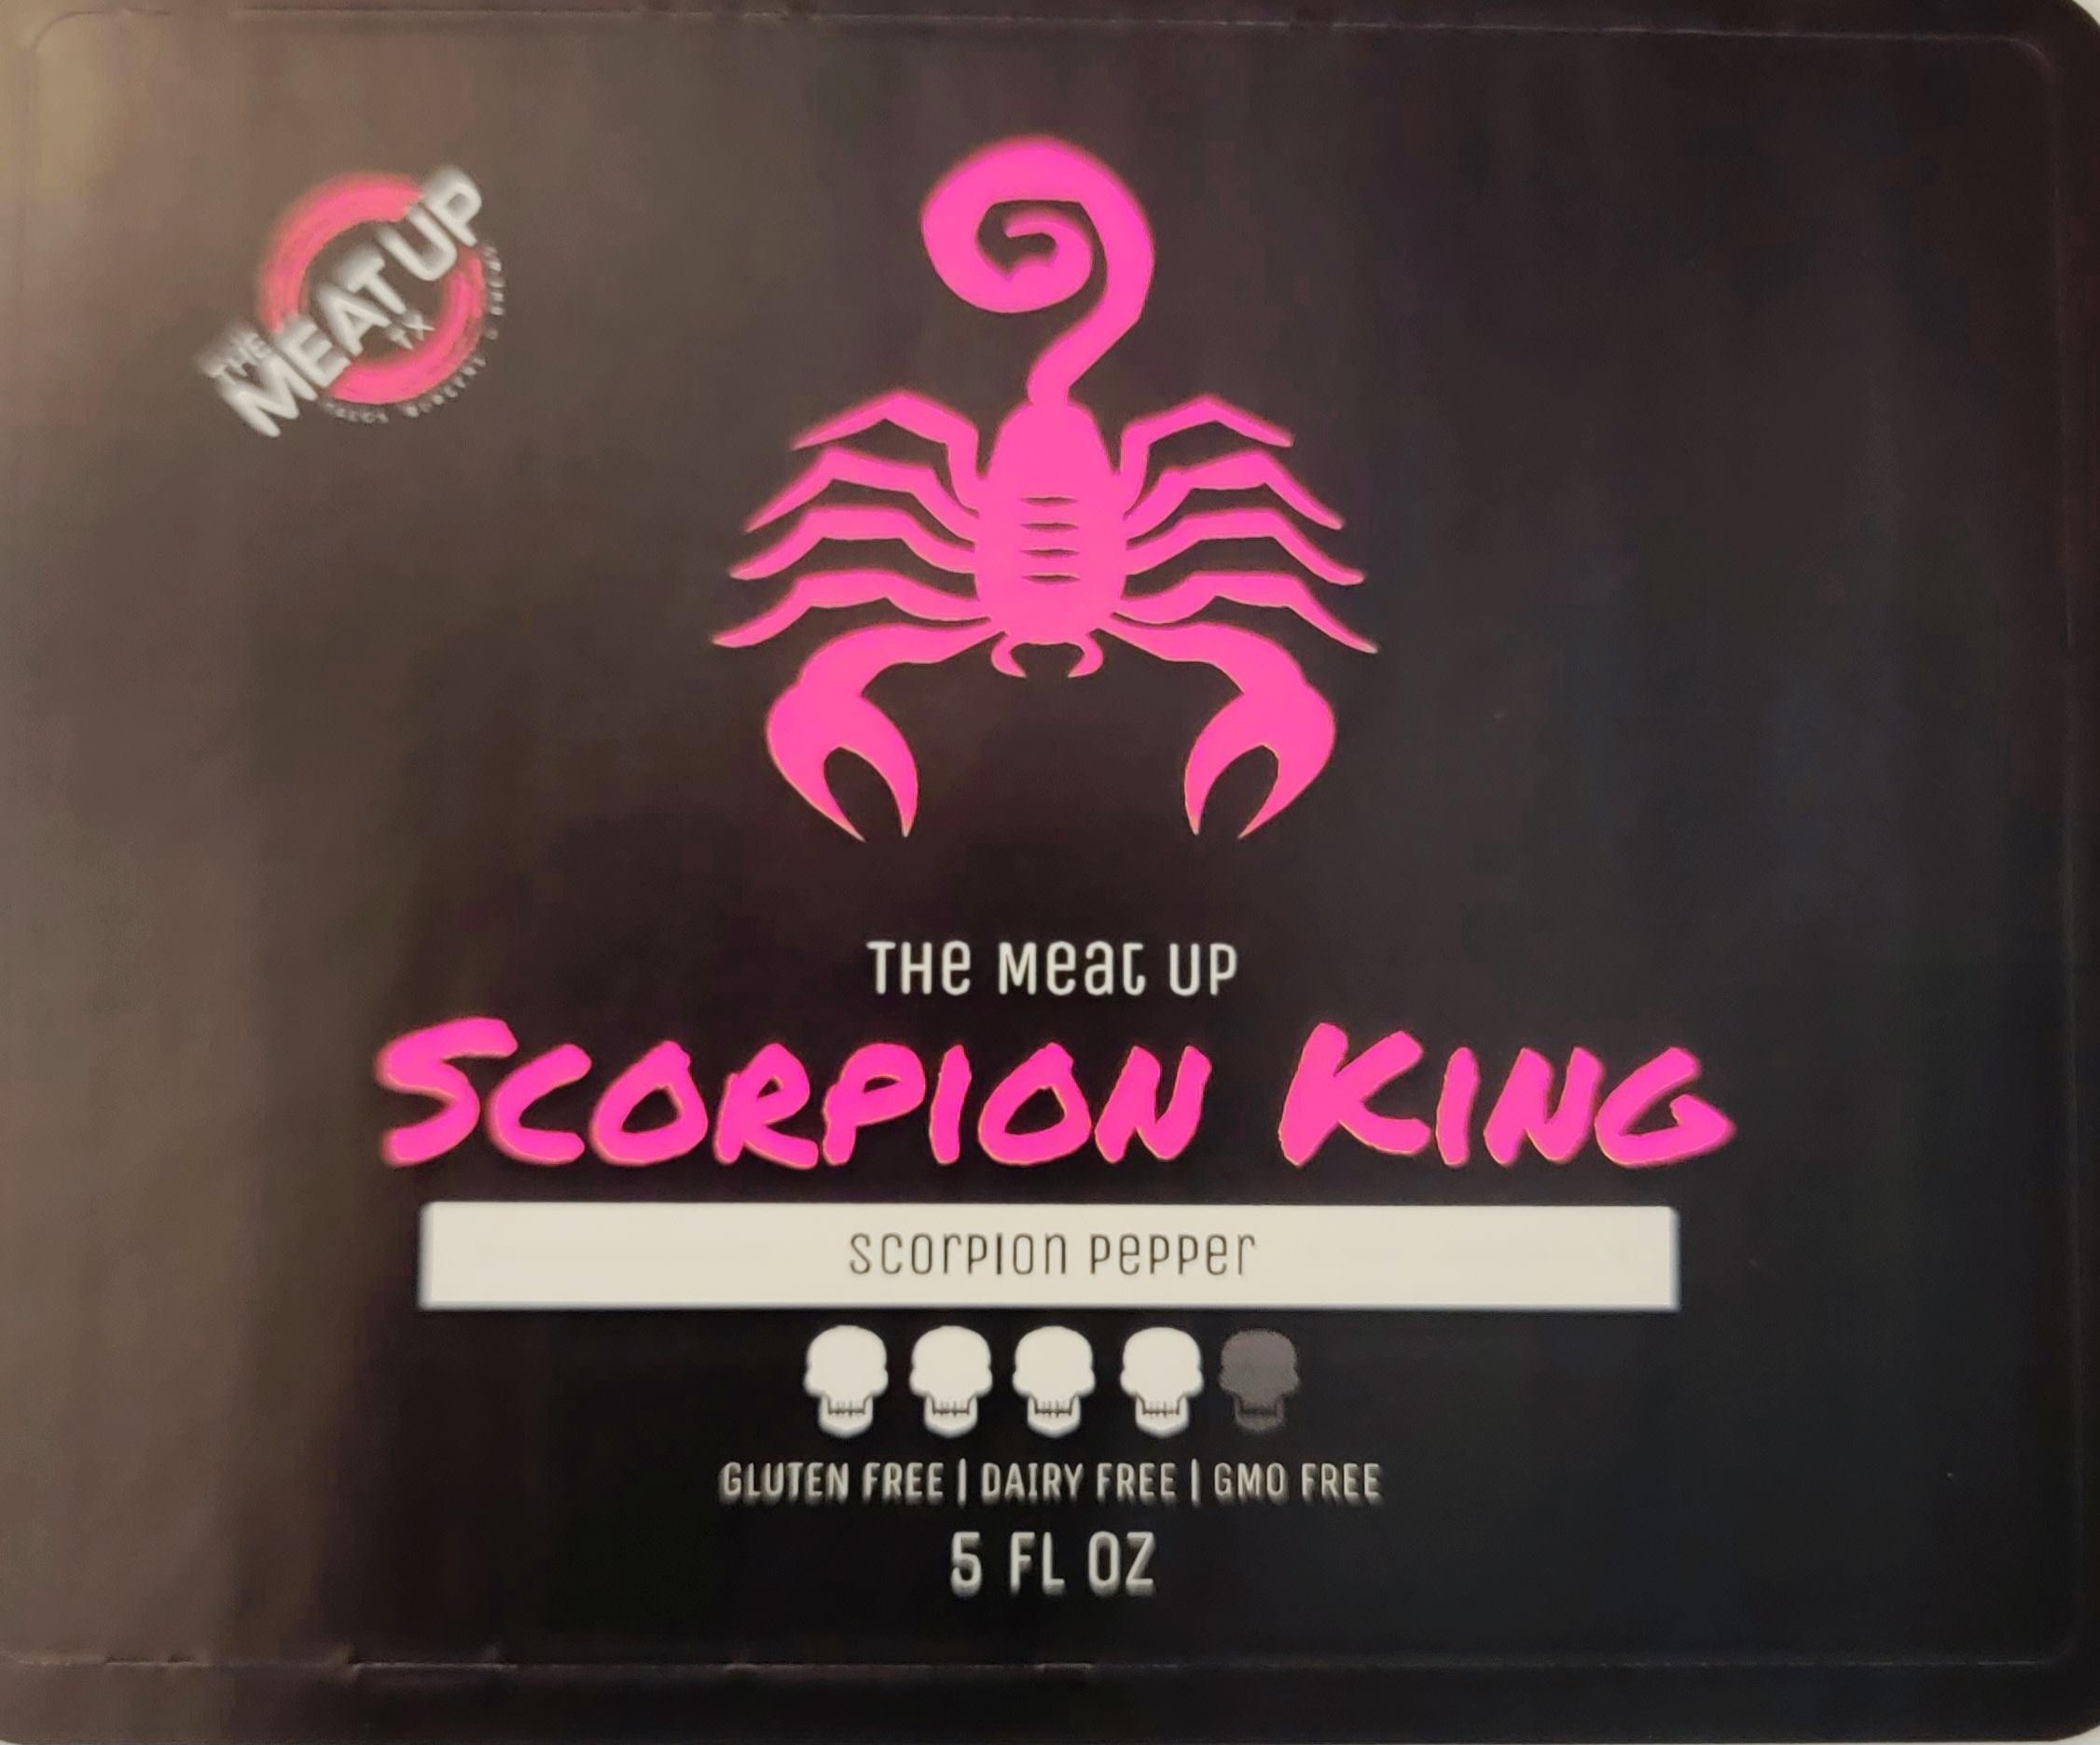 Scorpion King (Scorpion Pepper)